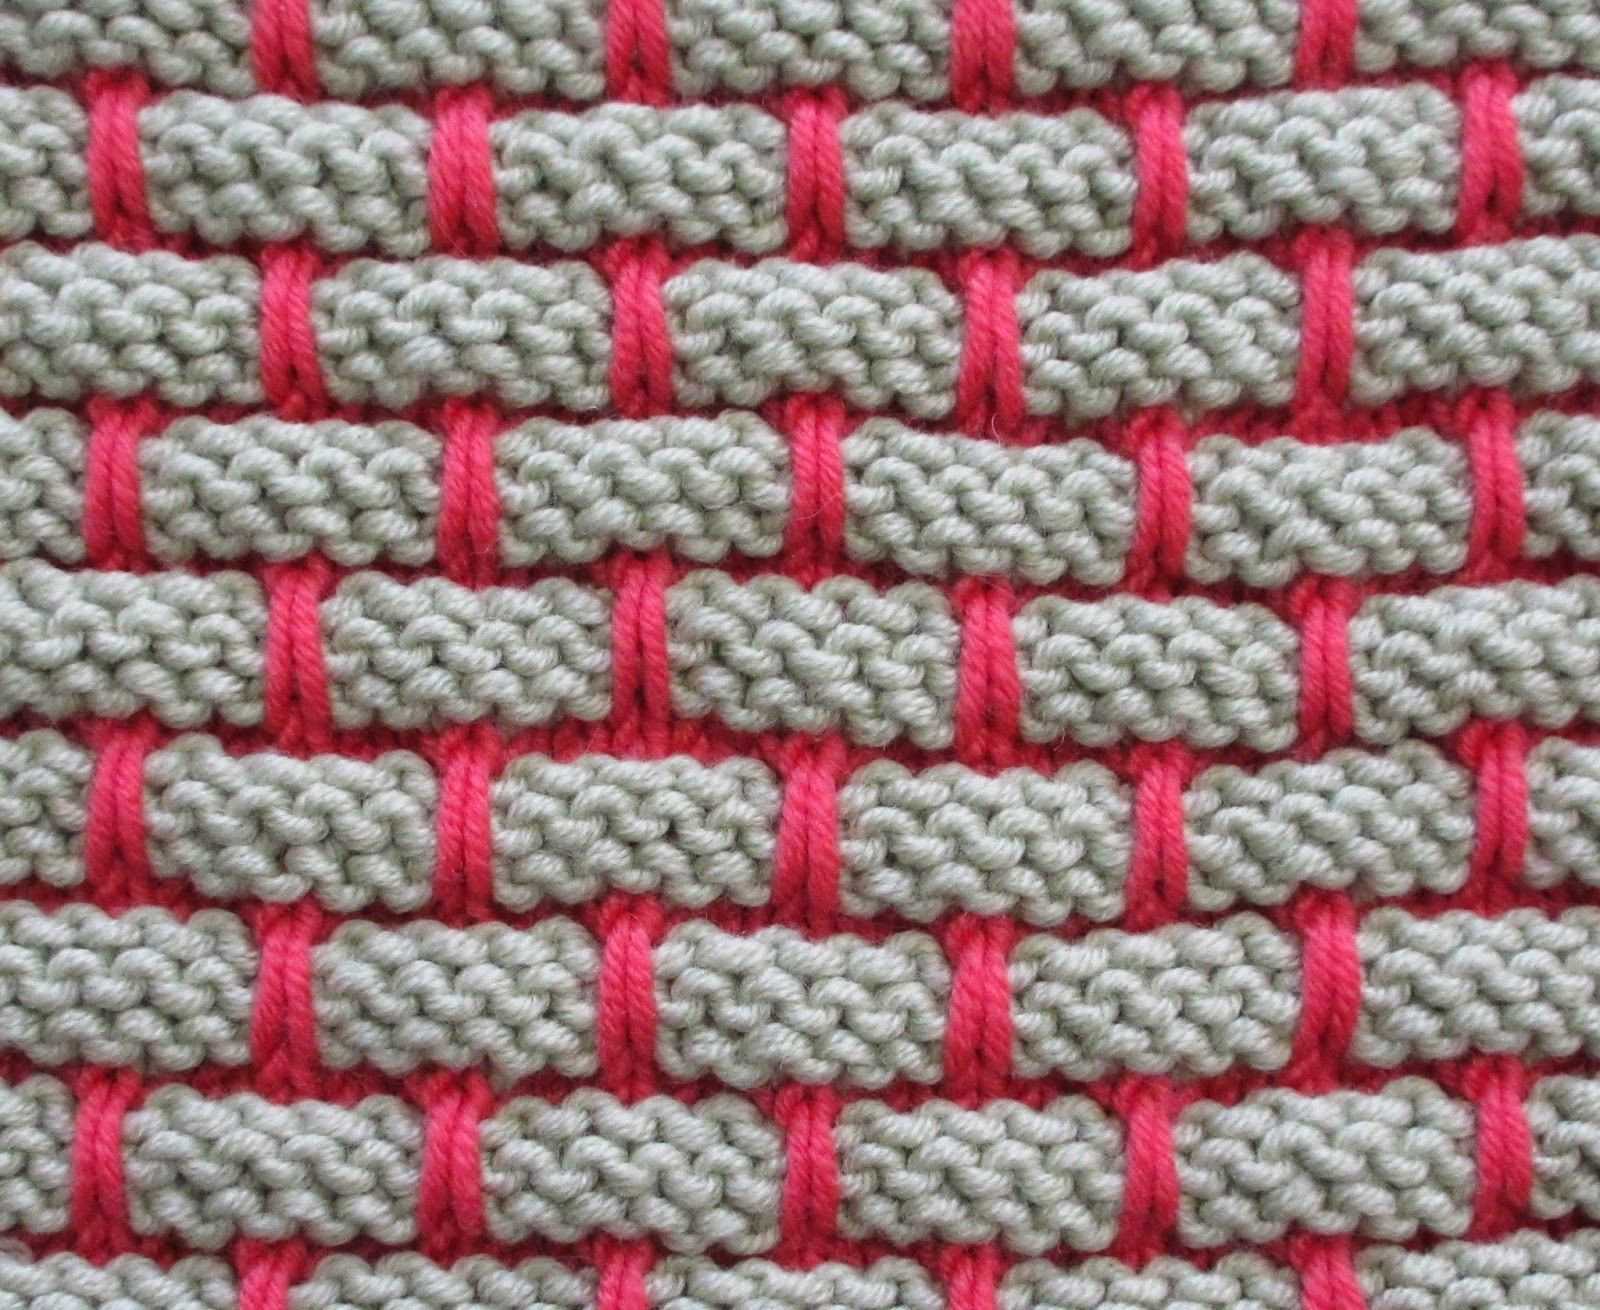 Brick Stitch Crochet Pattern Textured Knits 2 Color Brick Stitch